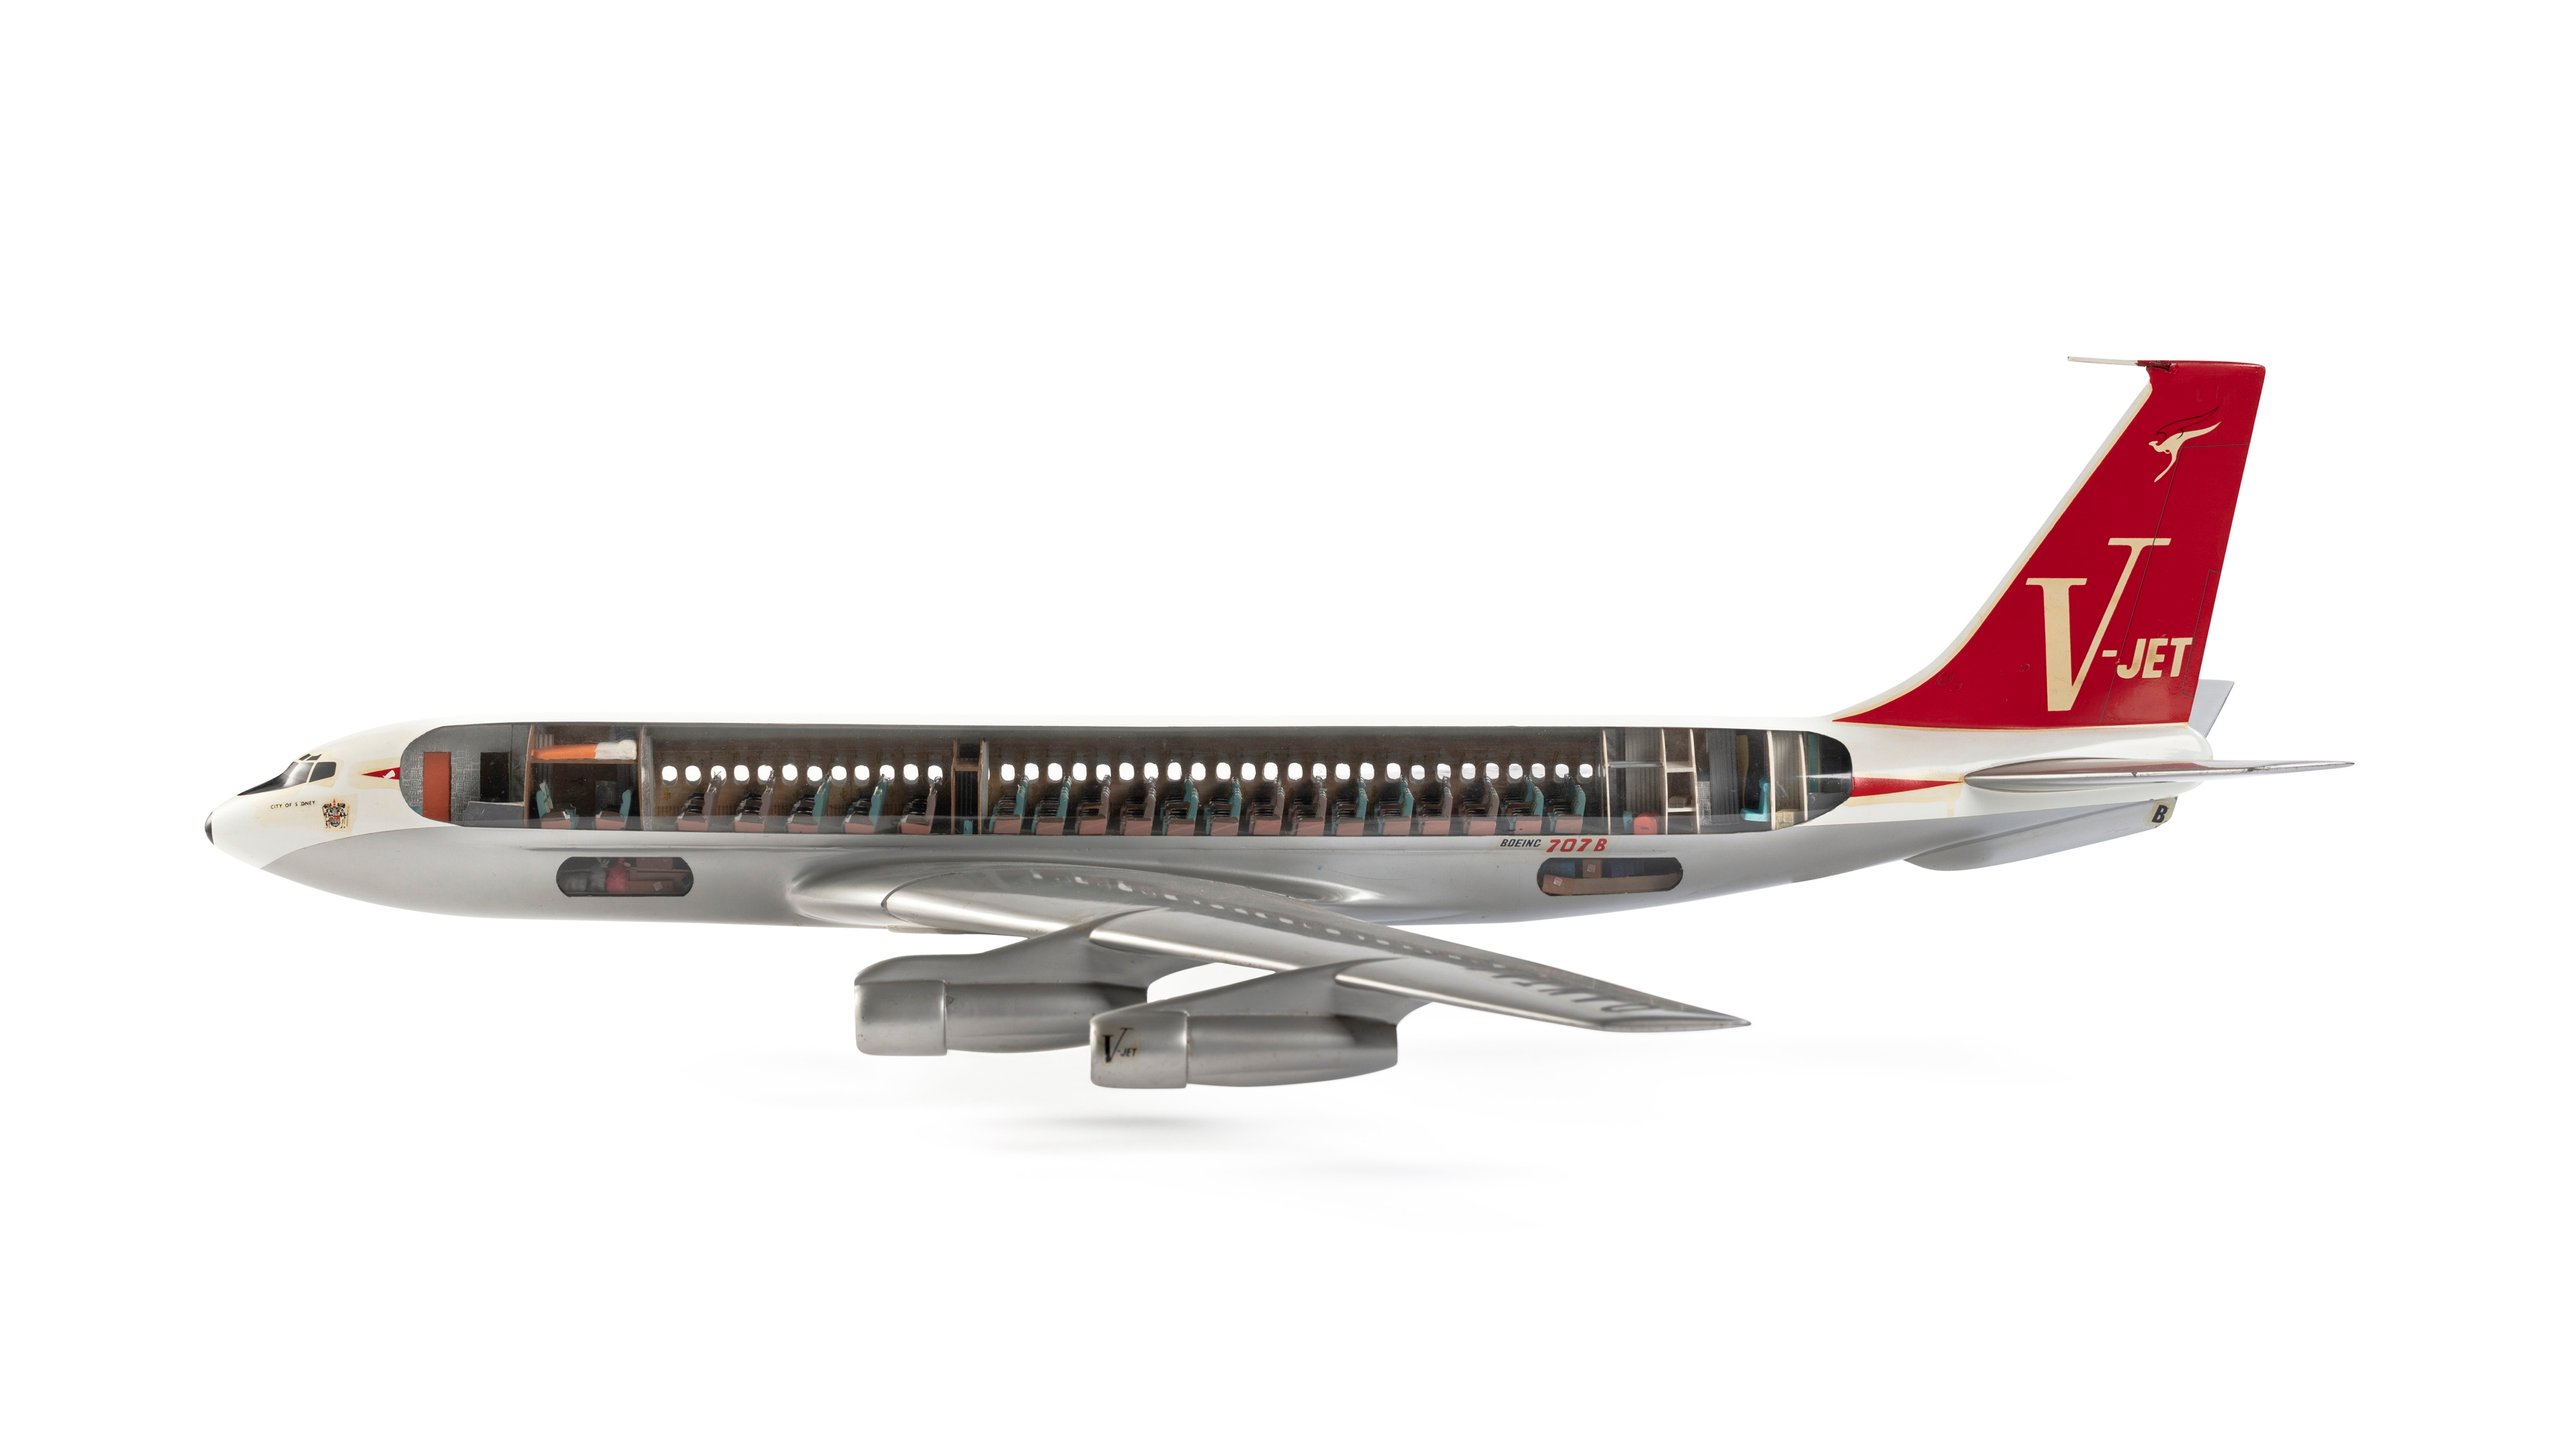 Model of 'City of Sydney' Qantas Boeing 707 aircraft